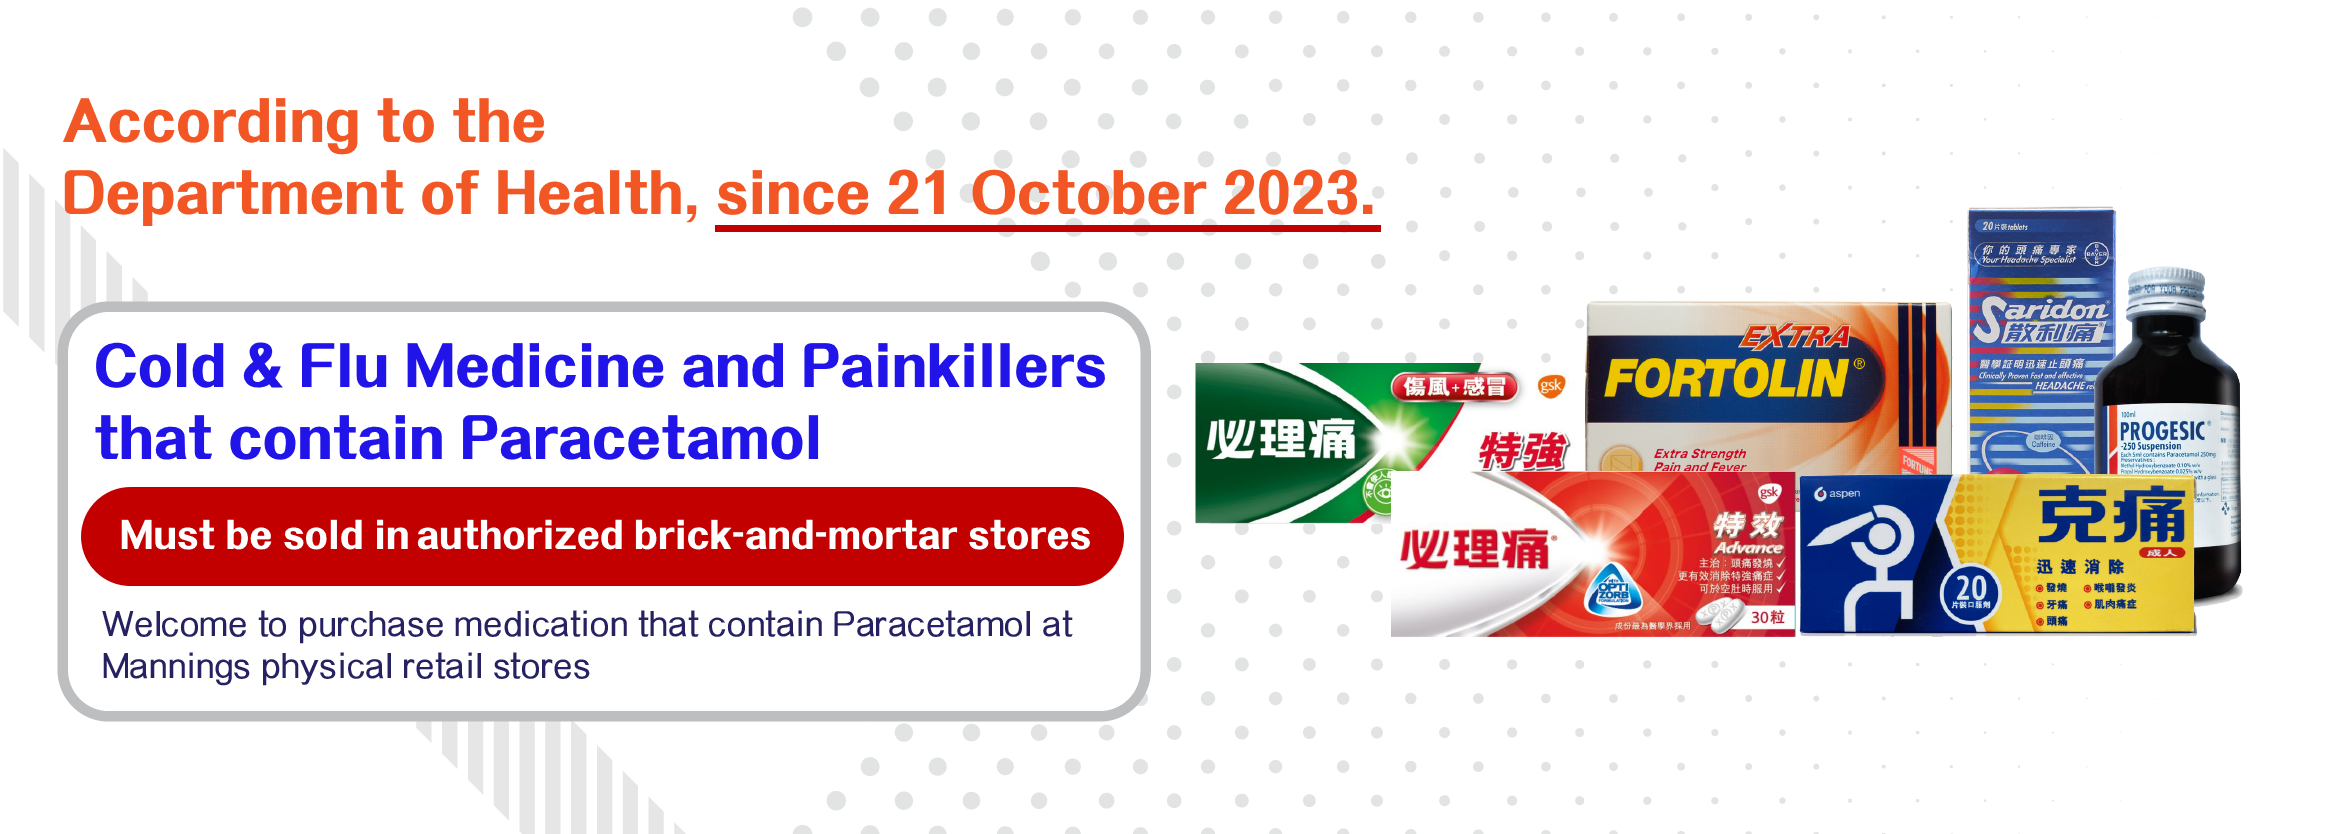 paracetamol_-02-1ENG_1710.png